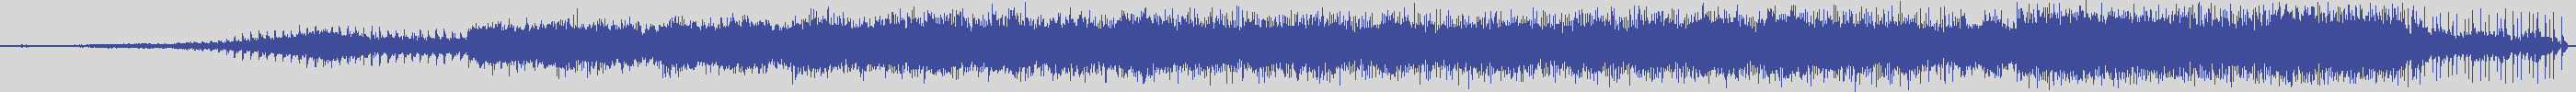 upr [UPR005] Adan,ilse - Slow Motion [Ex_tension Rmx] audio wave form